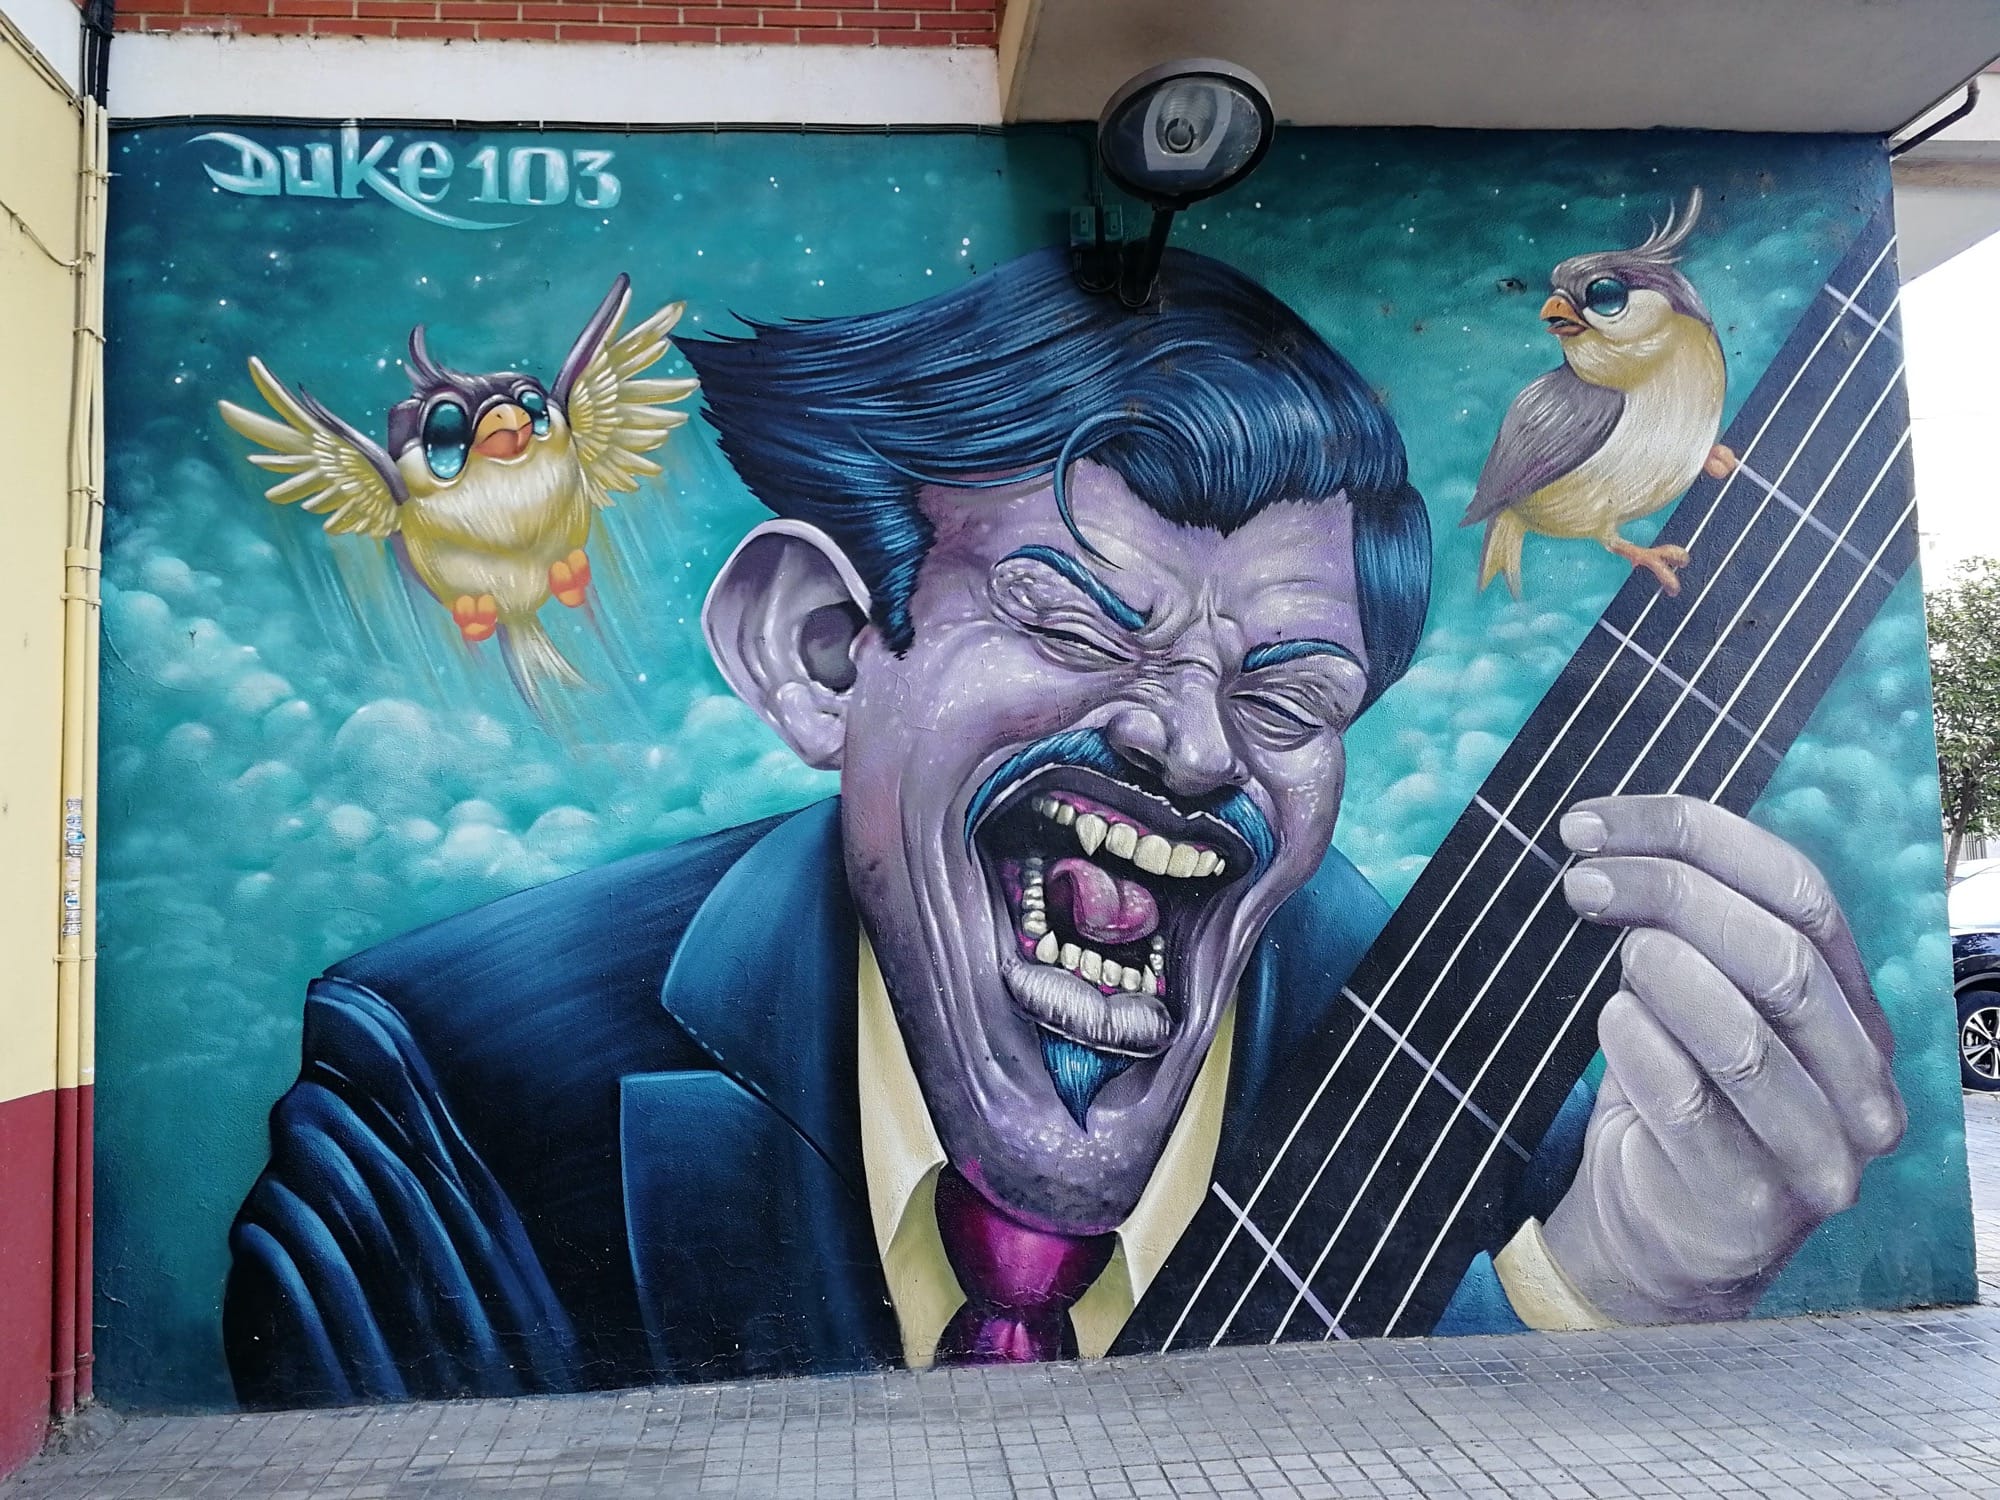 Graffiti 3682  by the artist Duke 103 captured by Rabot in València Spain